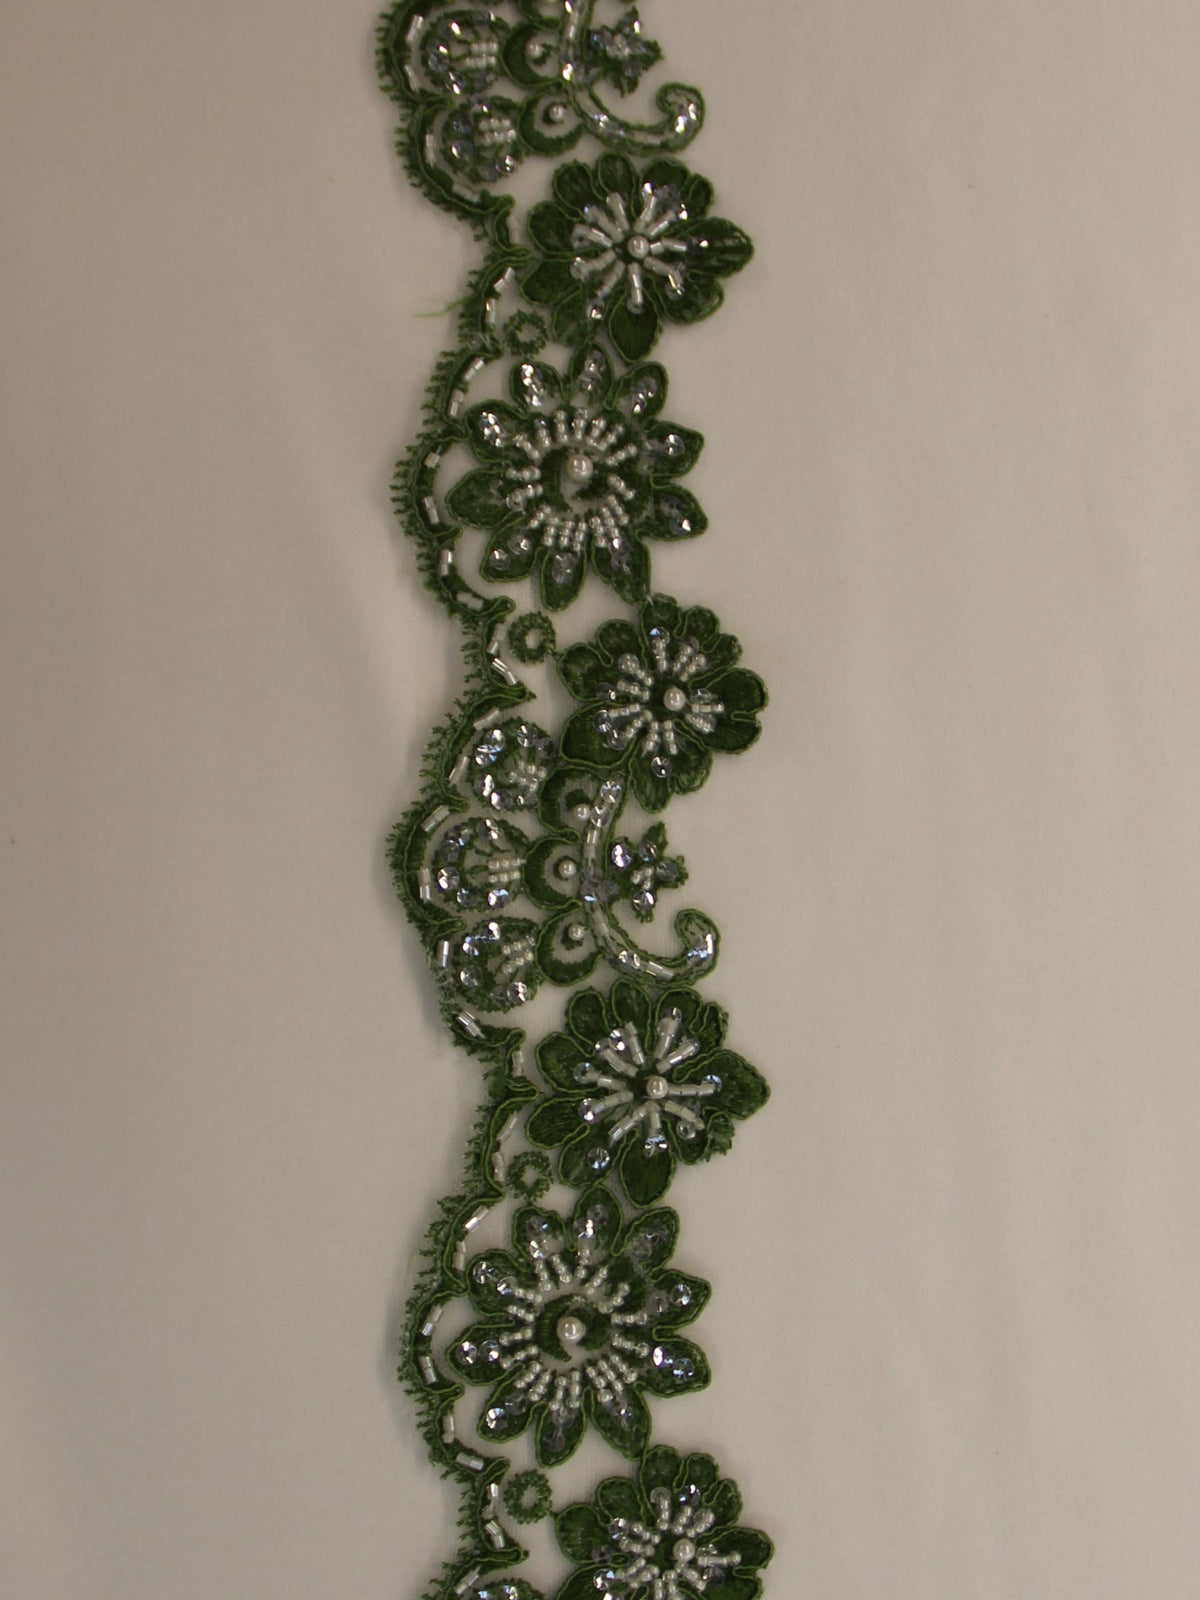 Emerald Green Lace Trim - Victoria